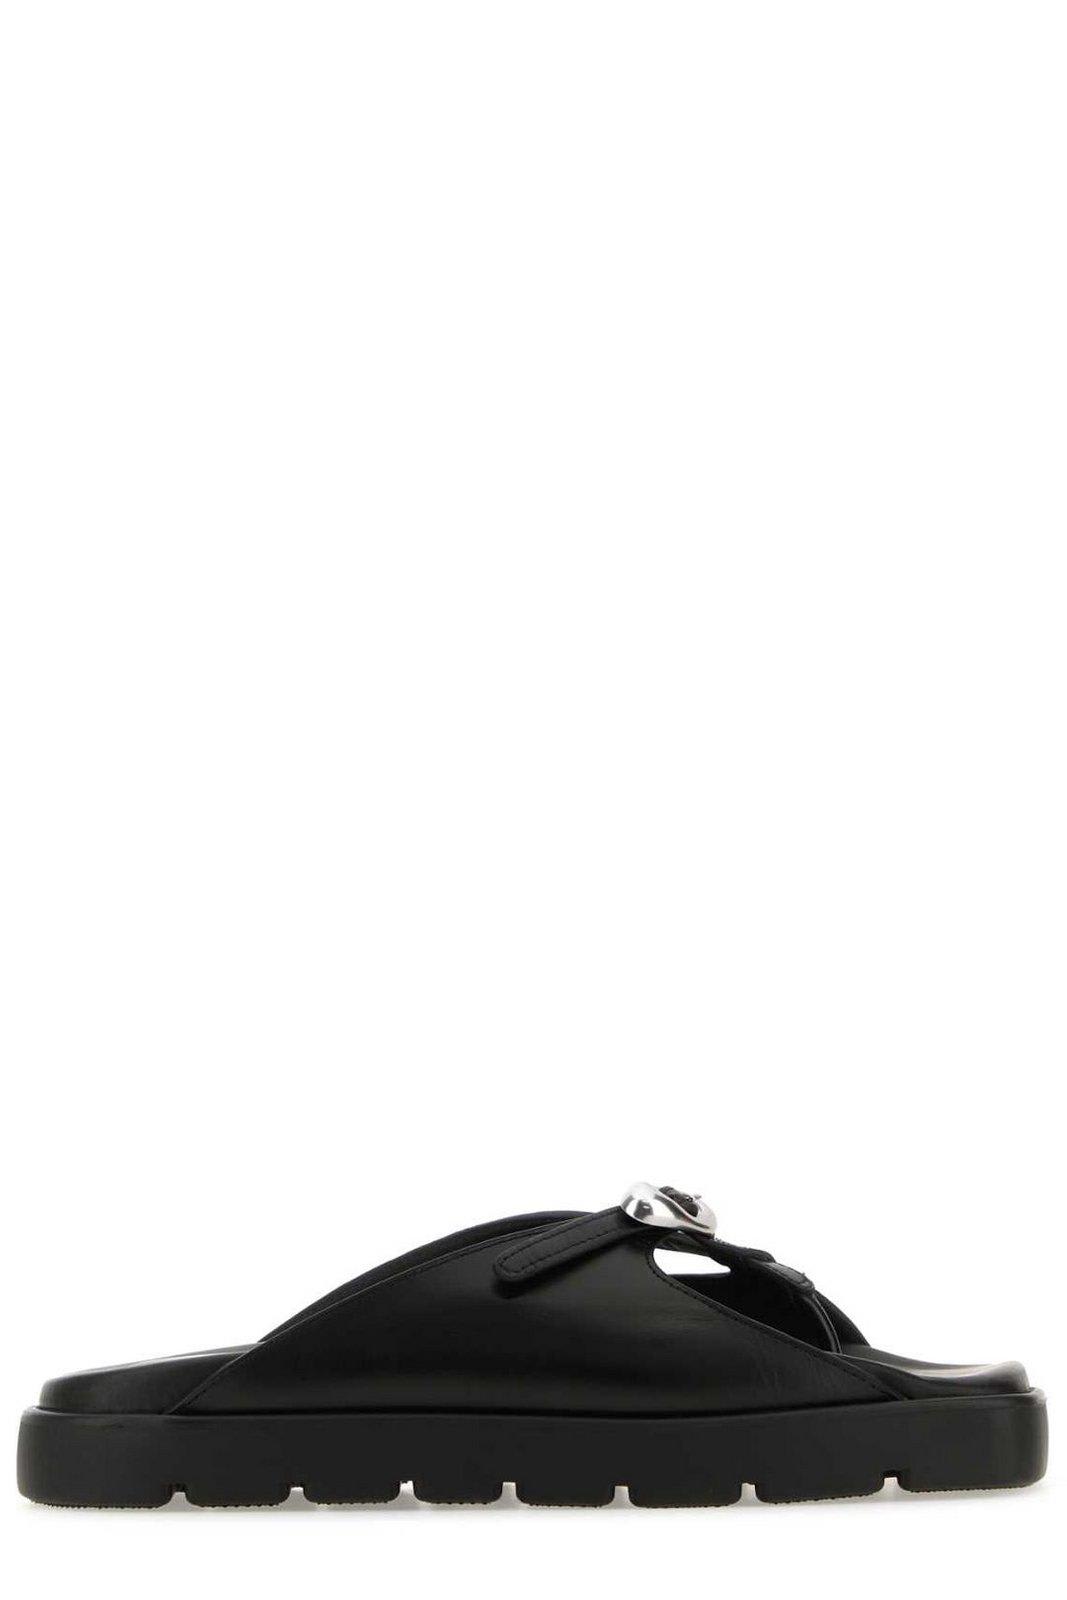 Alexander Wang Dome Flatform Sandals In Black